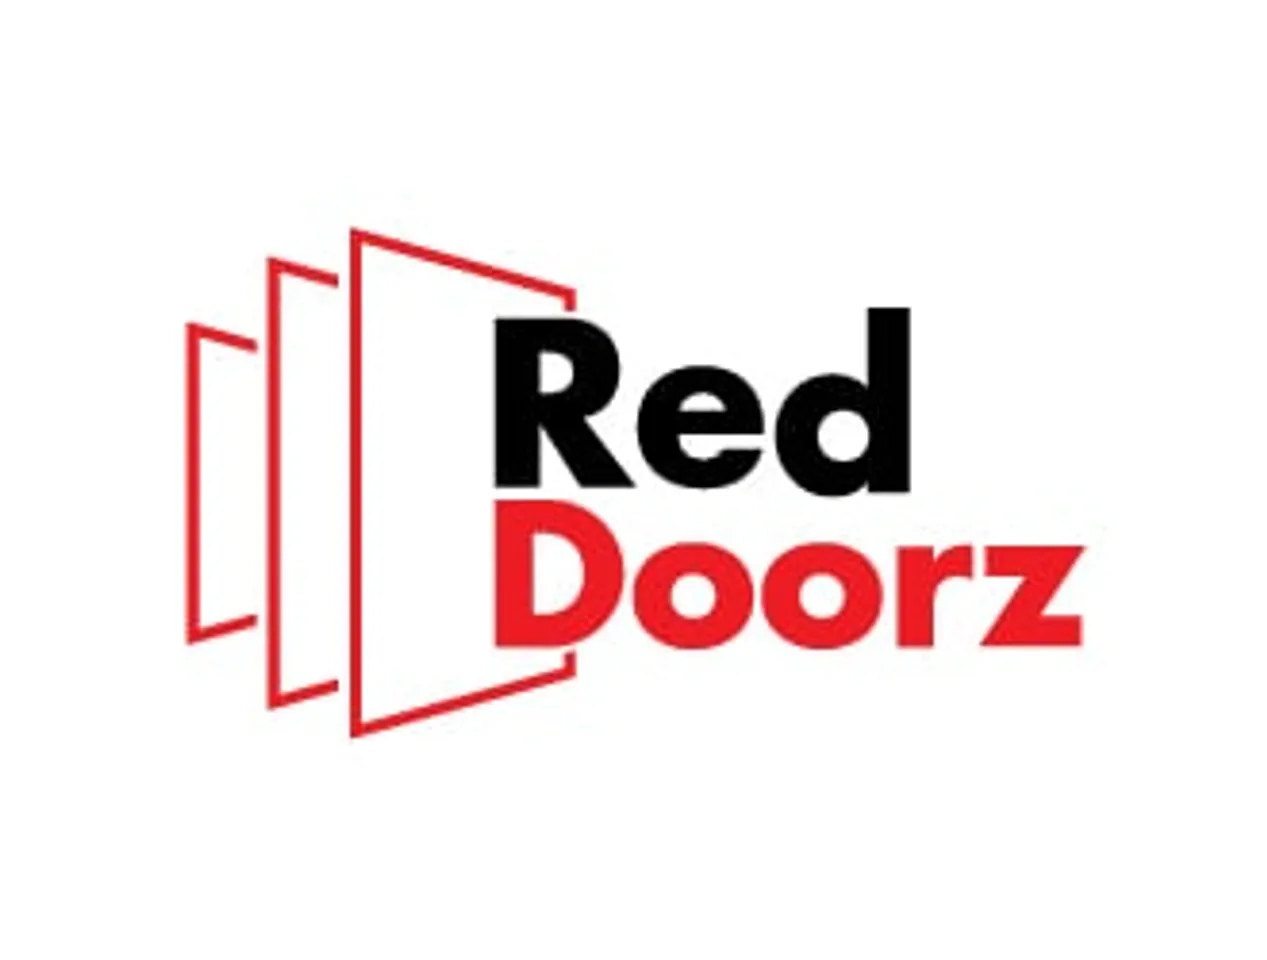 RedDoorz raises US$1 million from InnoVen